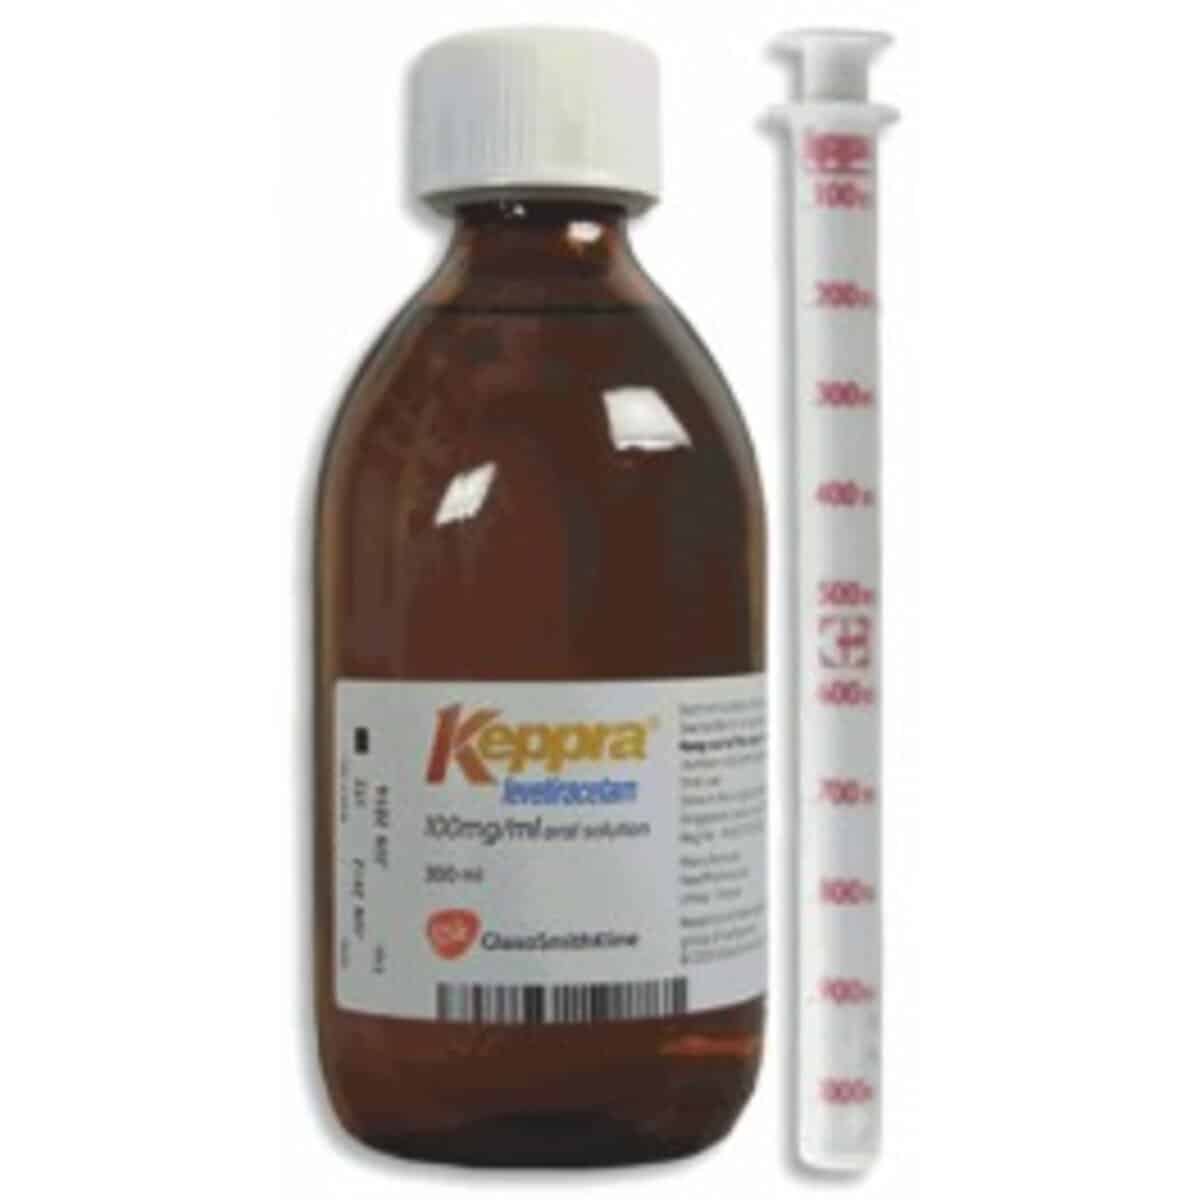 keppra oral solution – levetiracetam solution 100mg ml with 1ml syringe 150ml 1